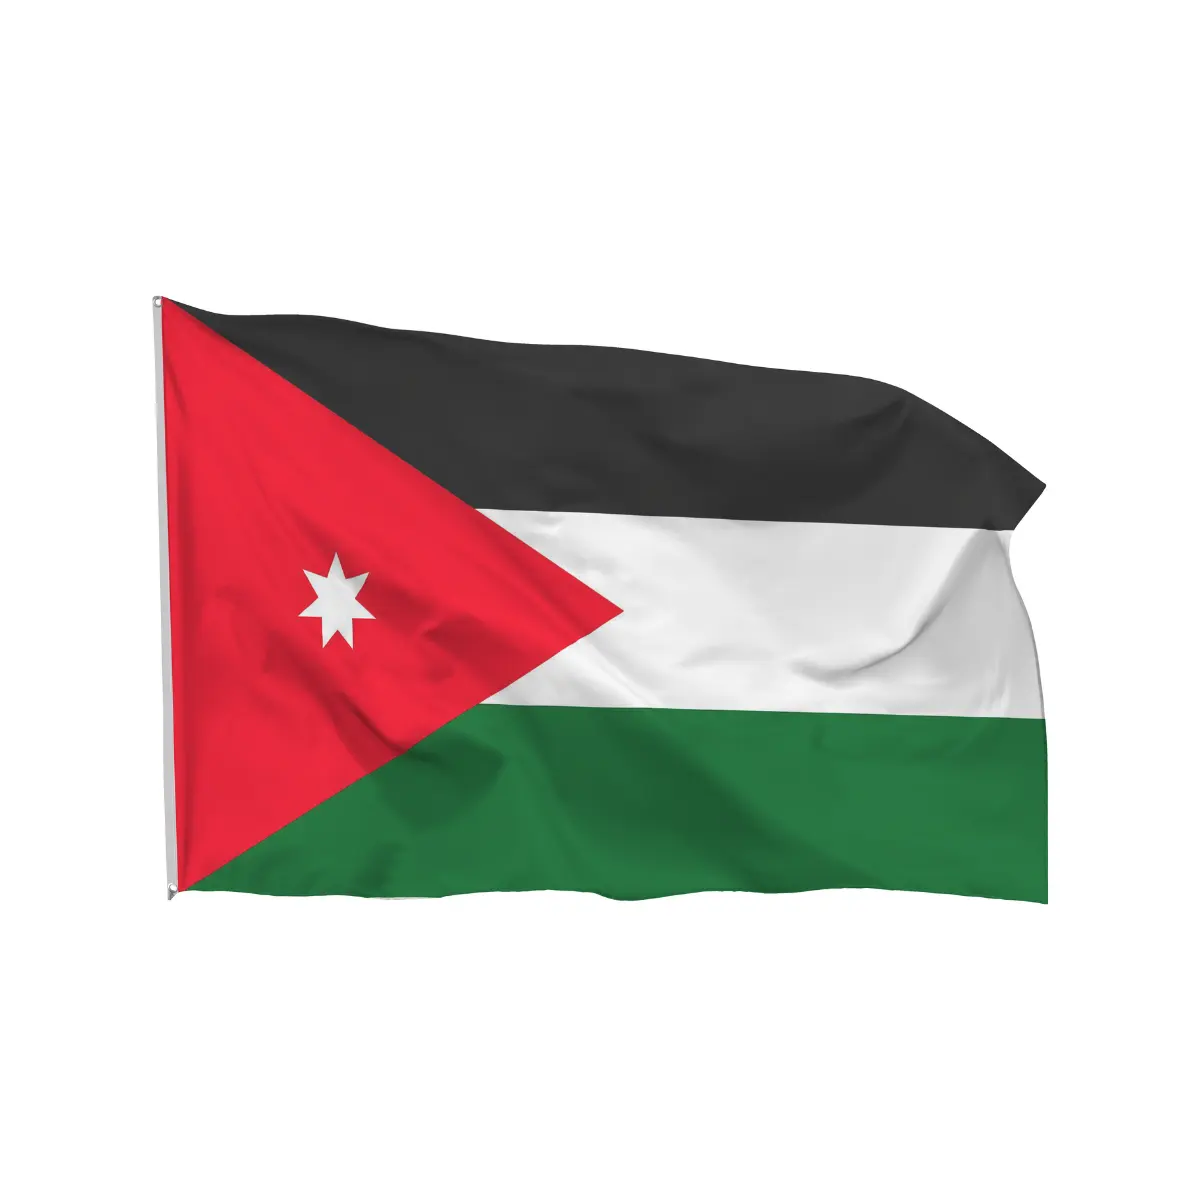 New Custom Logo Design 3x5Ft 90x150cm Digital Printing 100% Polyester Red Black Green Palestine National Country Flag